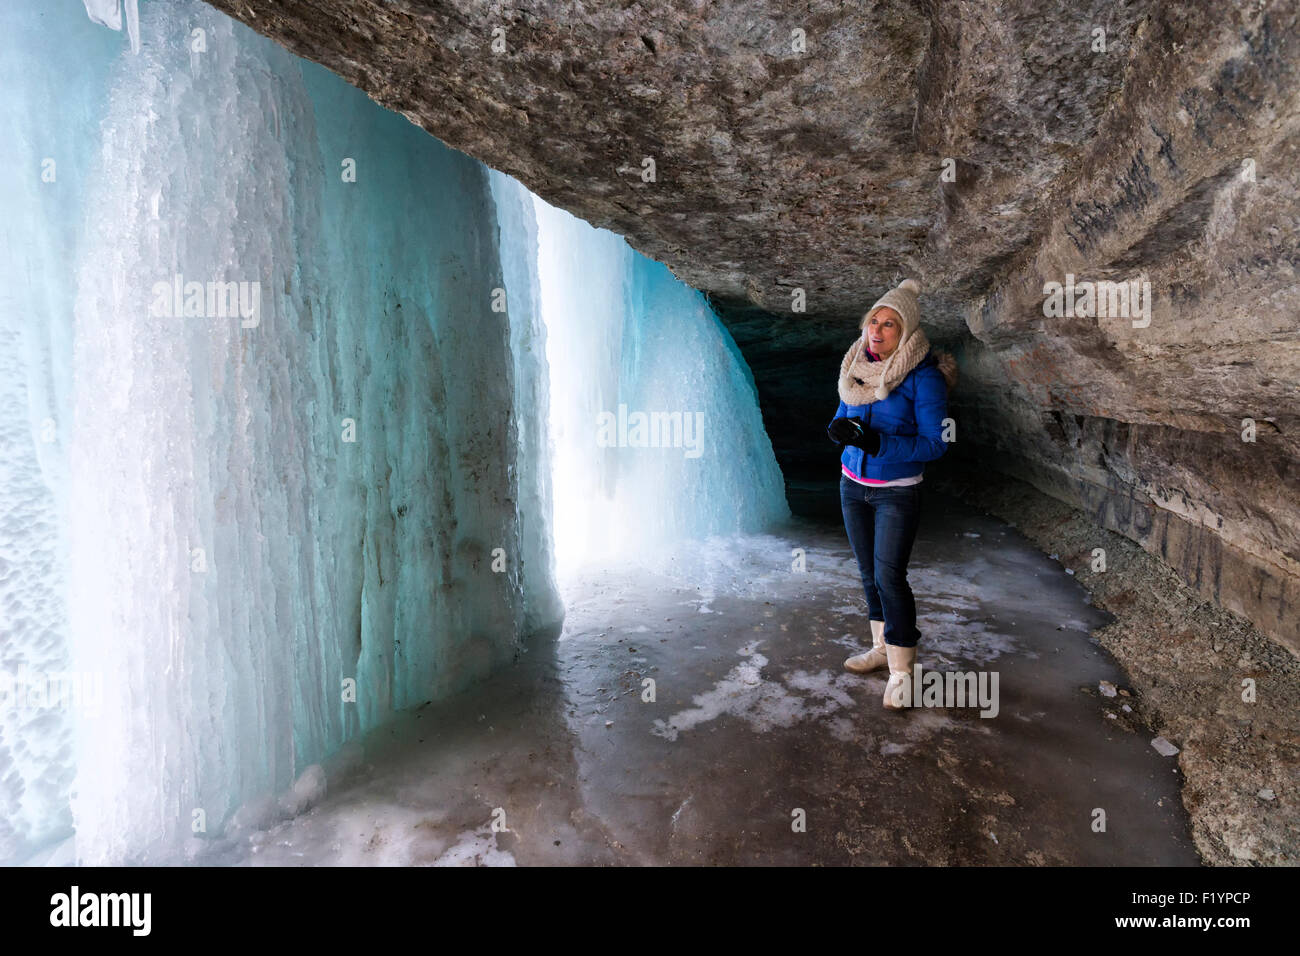 Caucasian woman in winter clothing explores behind frozen Minnehaha Falls in winter, Minneapolis, MN, USA Stock Photo